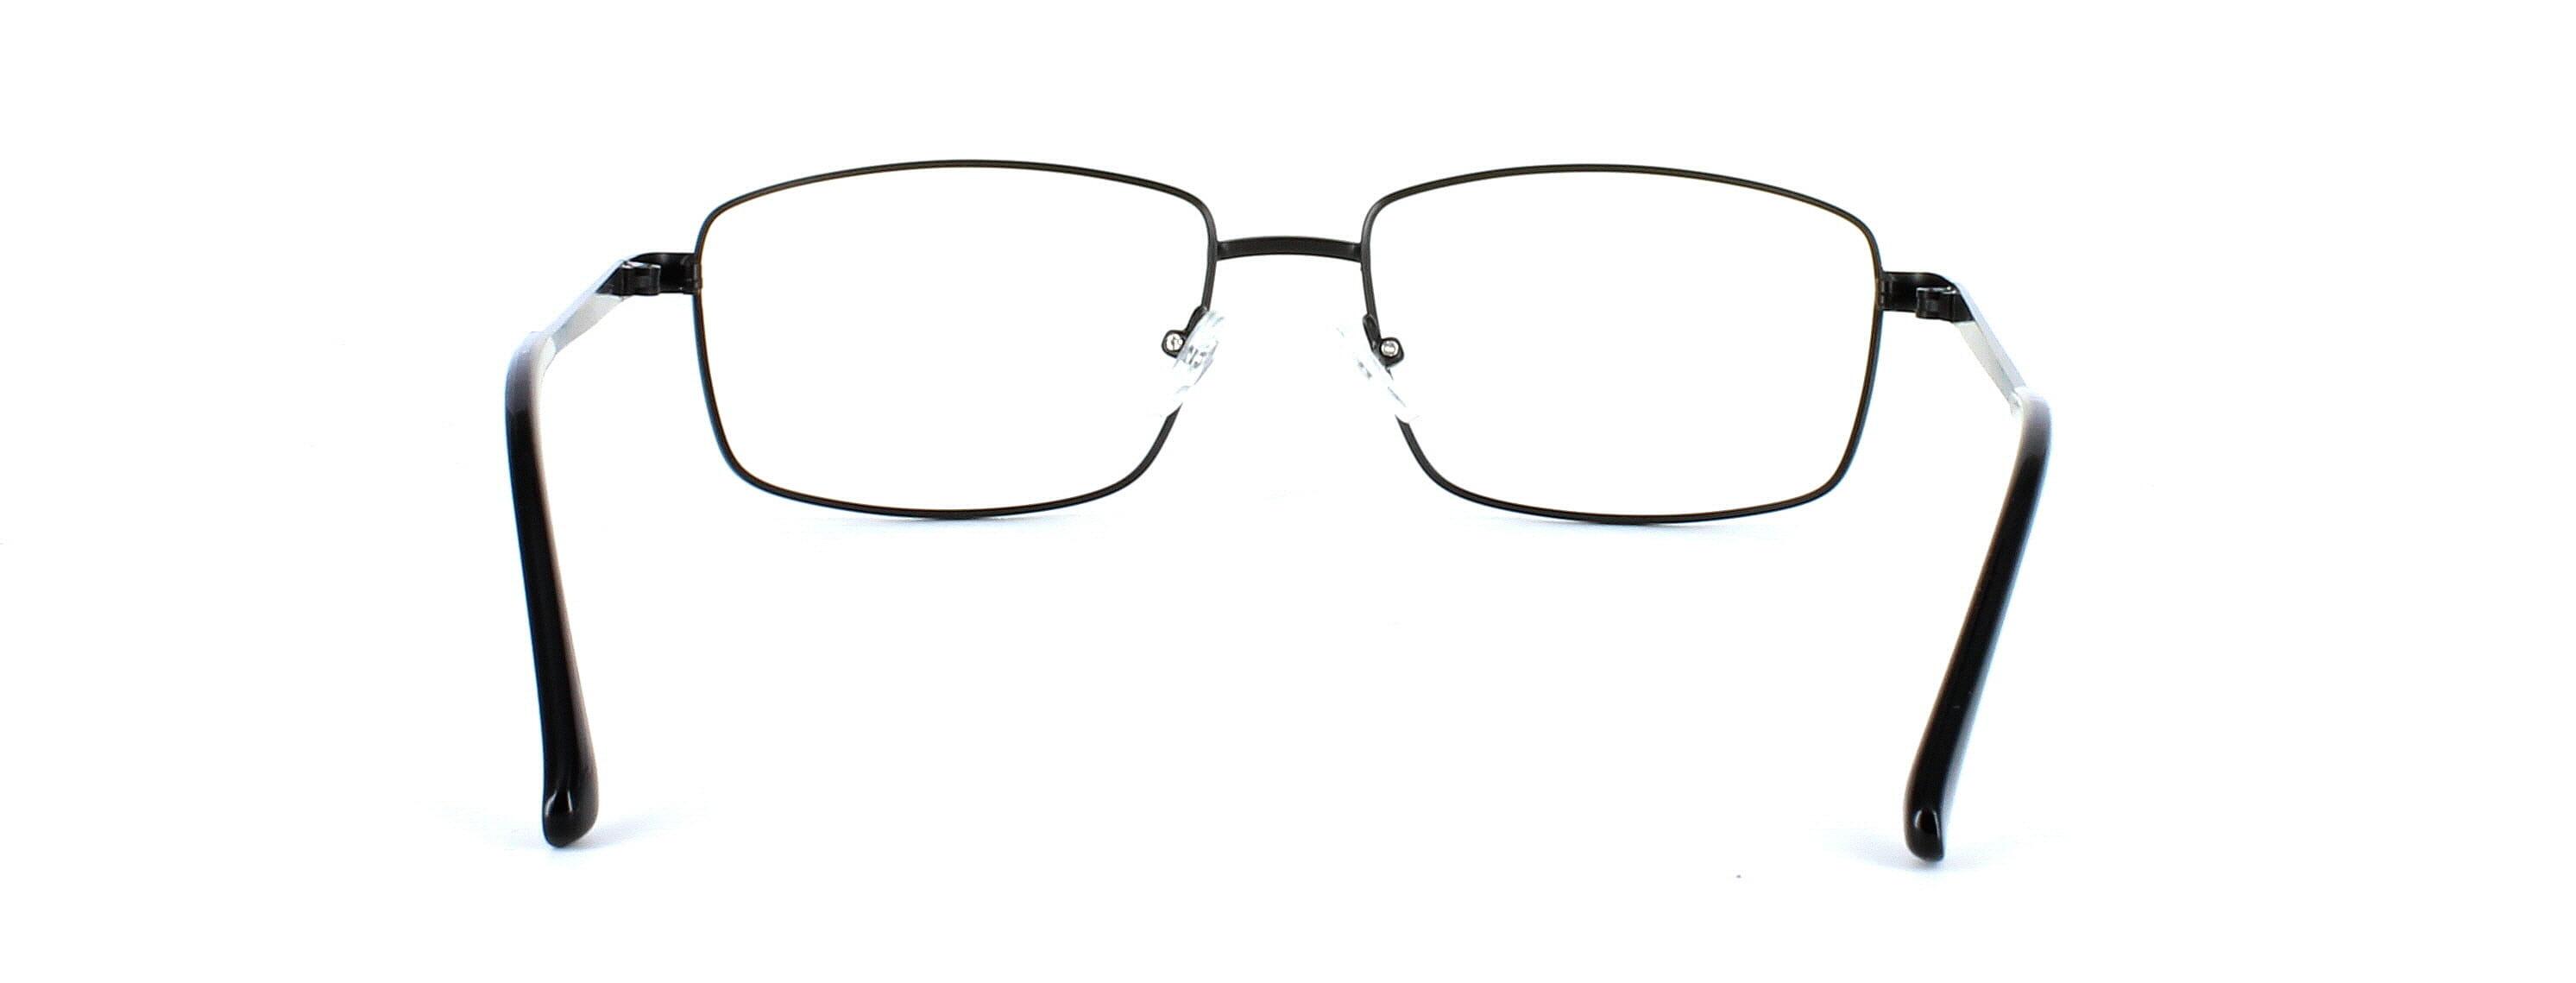 Ventry - Gents rectangular shaped full rim metal glasses - image view 4